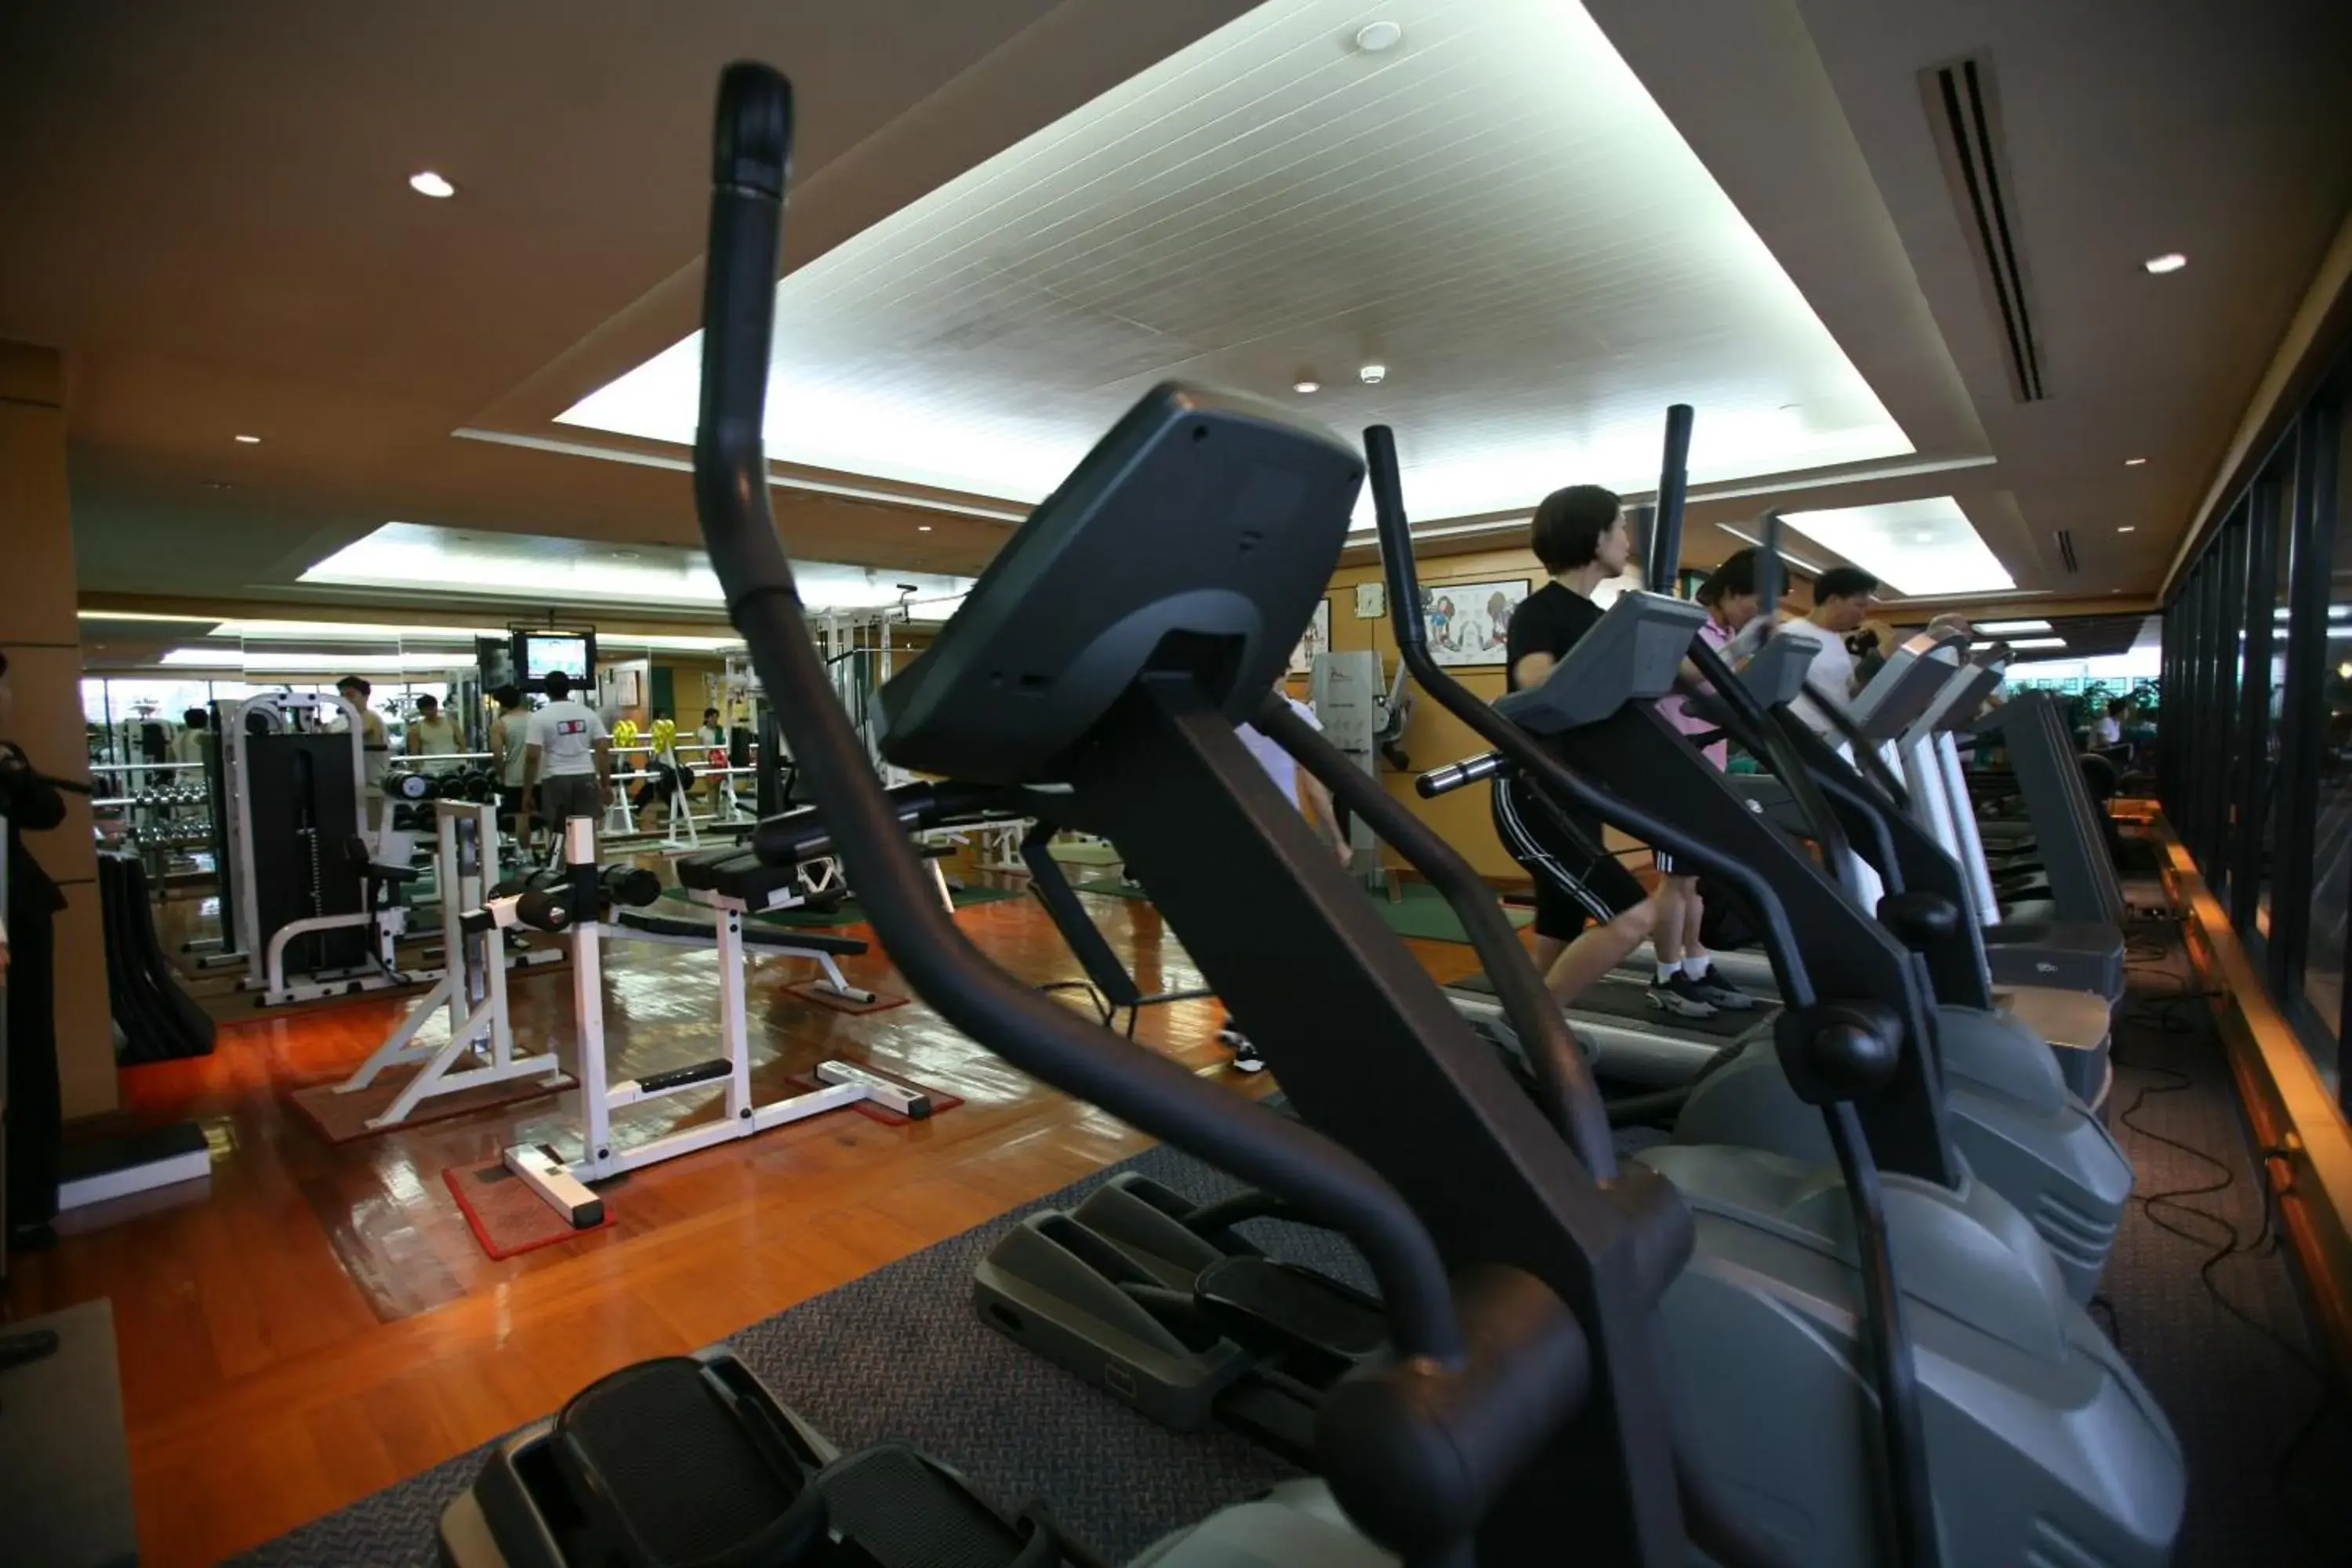 Fitness centre/facilities, Fitness Center/Facilities in Golden Tulip Sovereign Hotel Bangkok